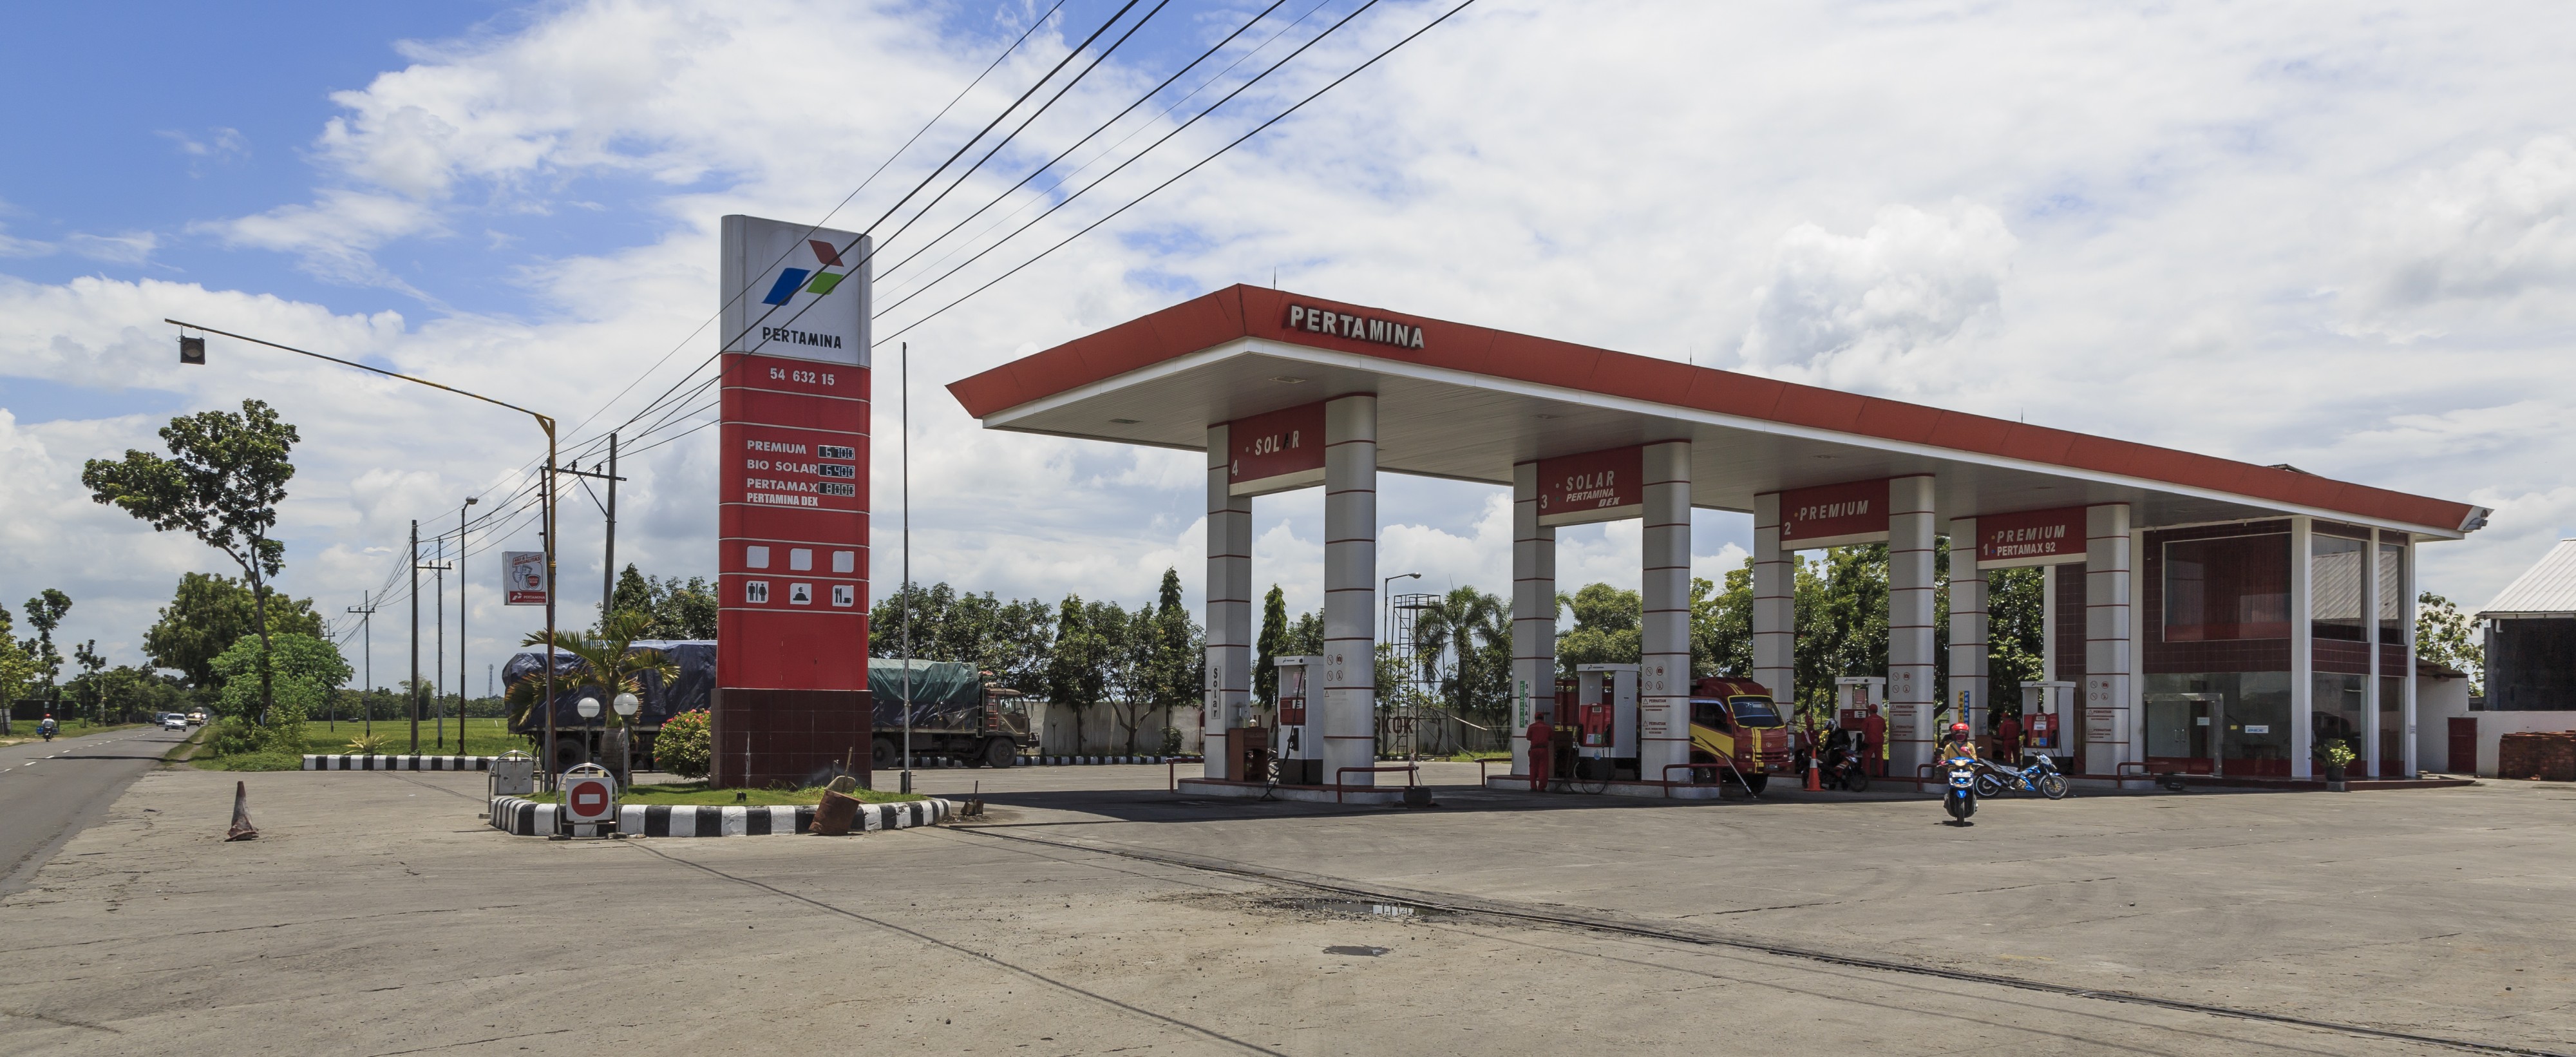 Sukoharjo-Regency Indonesia PERTAMINA-fuel-station-01